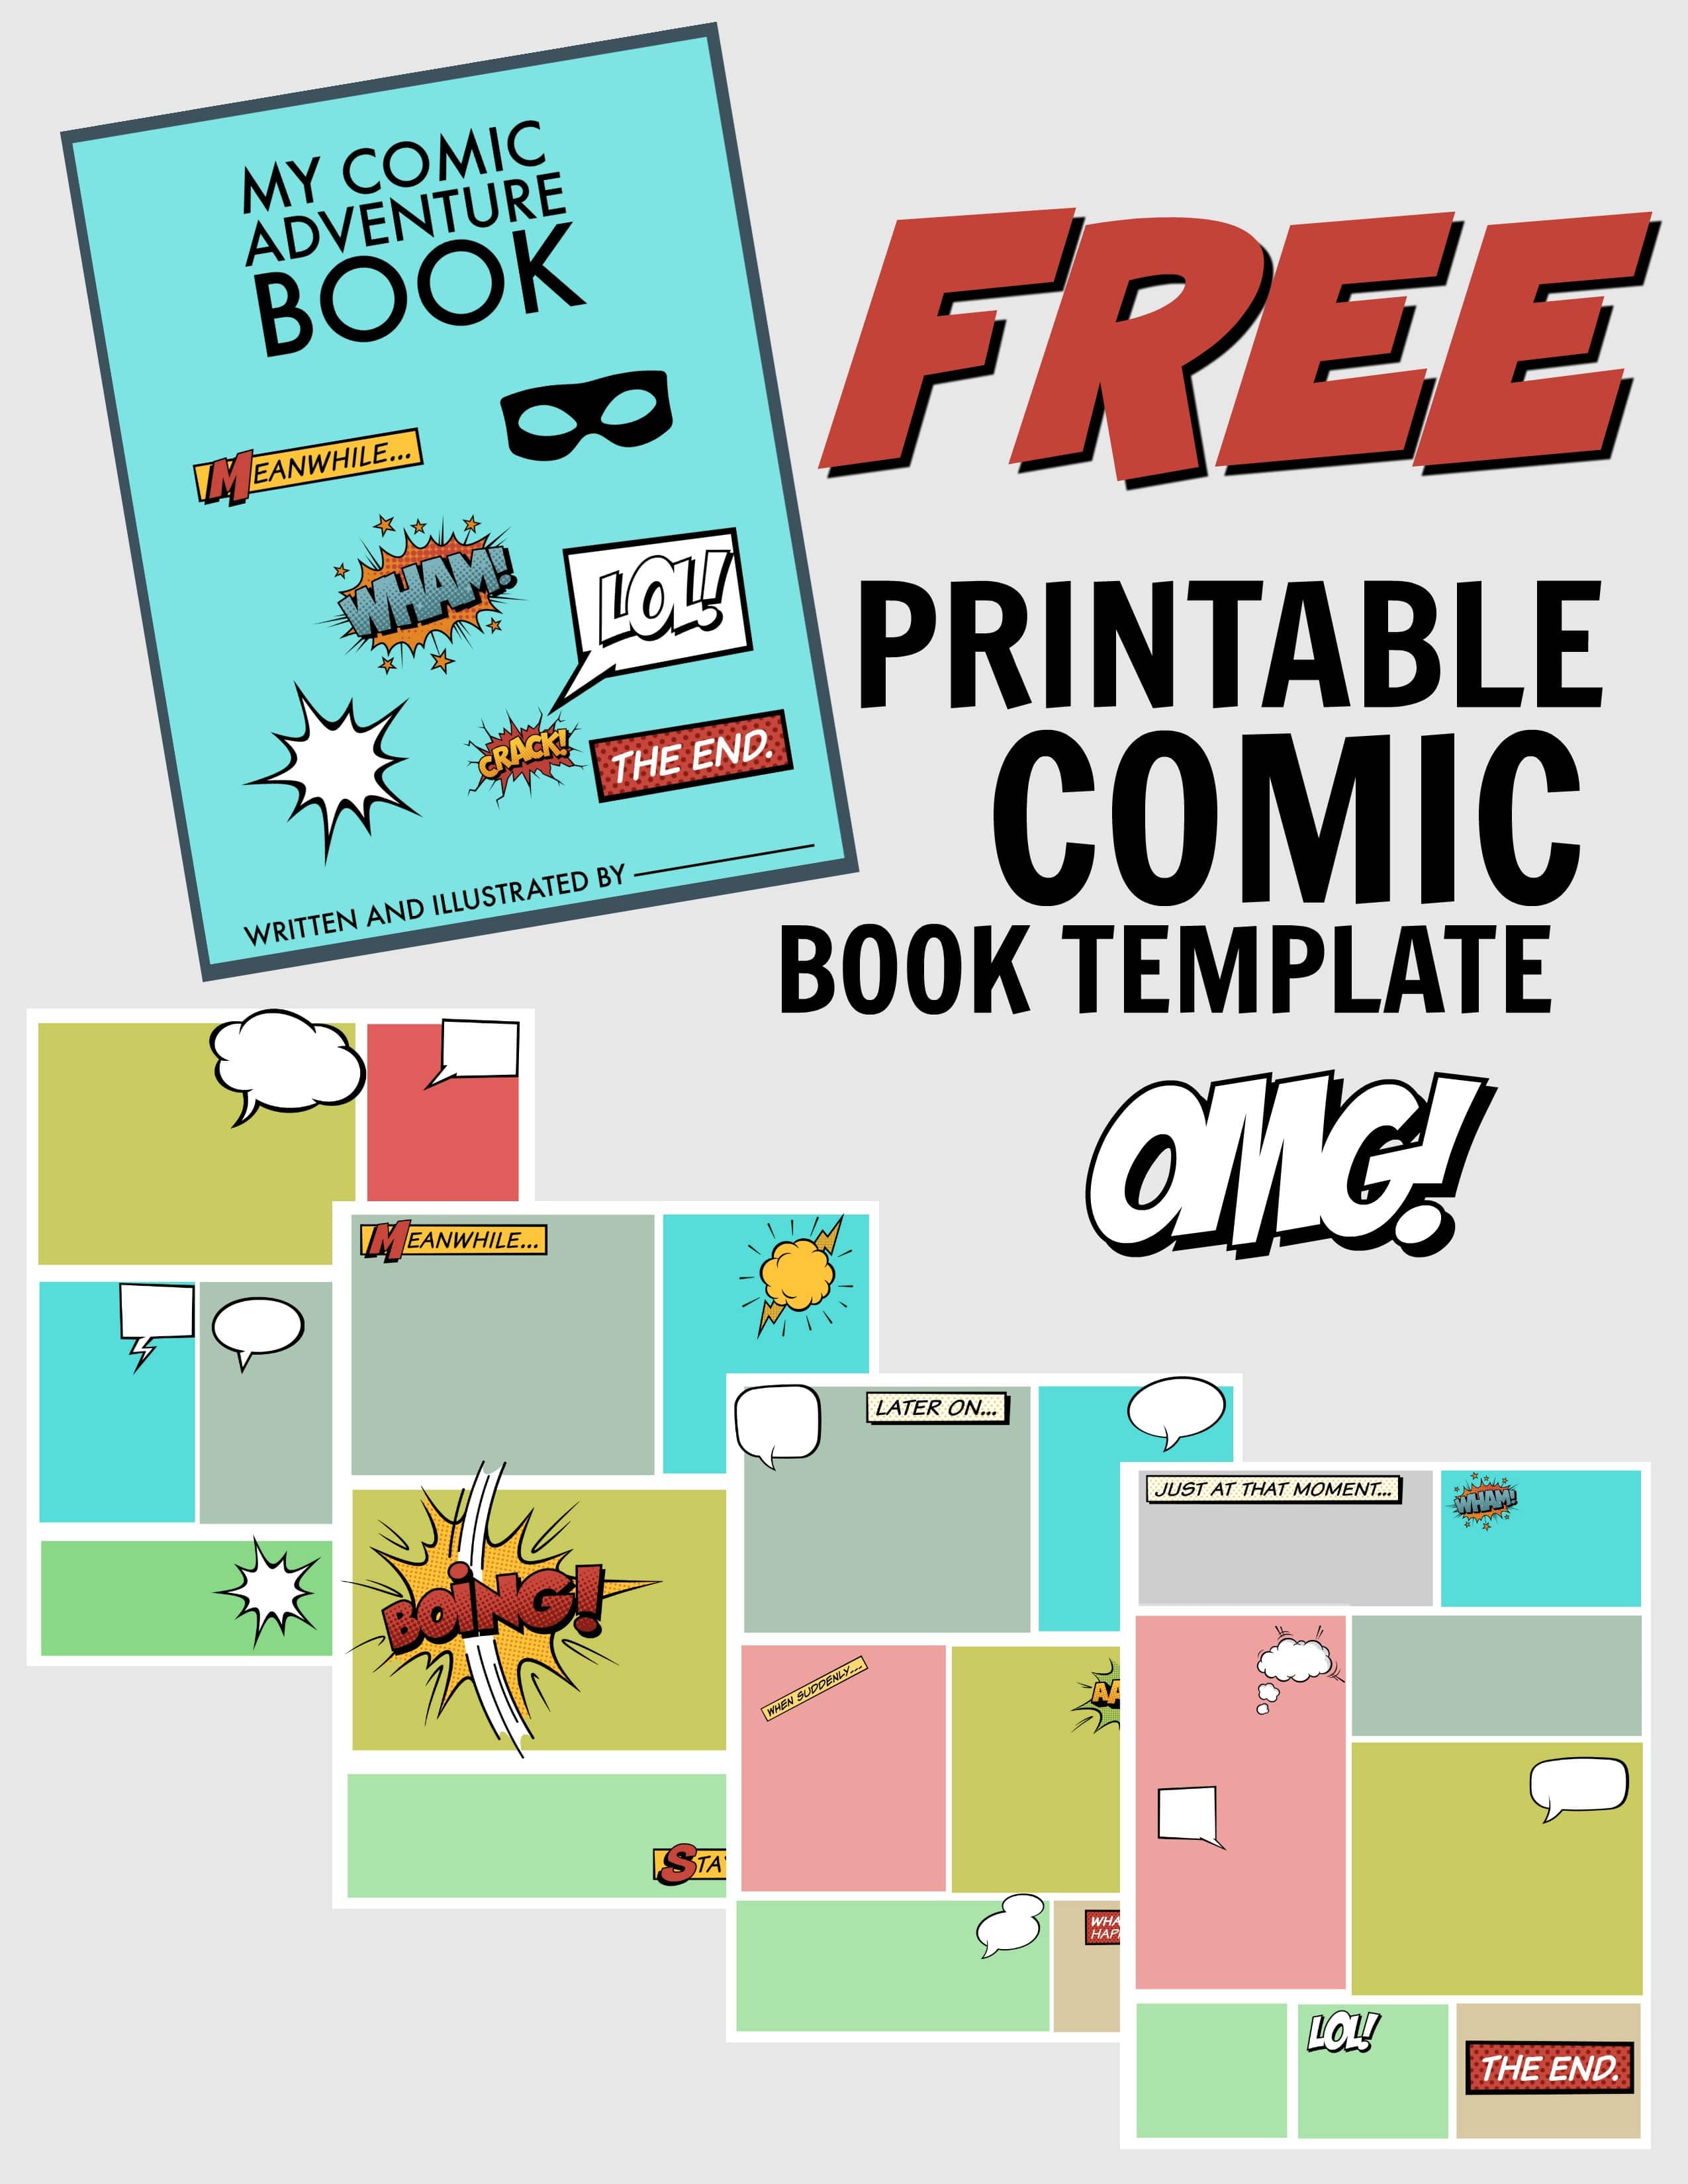 Free printable comic book template.